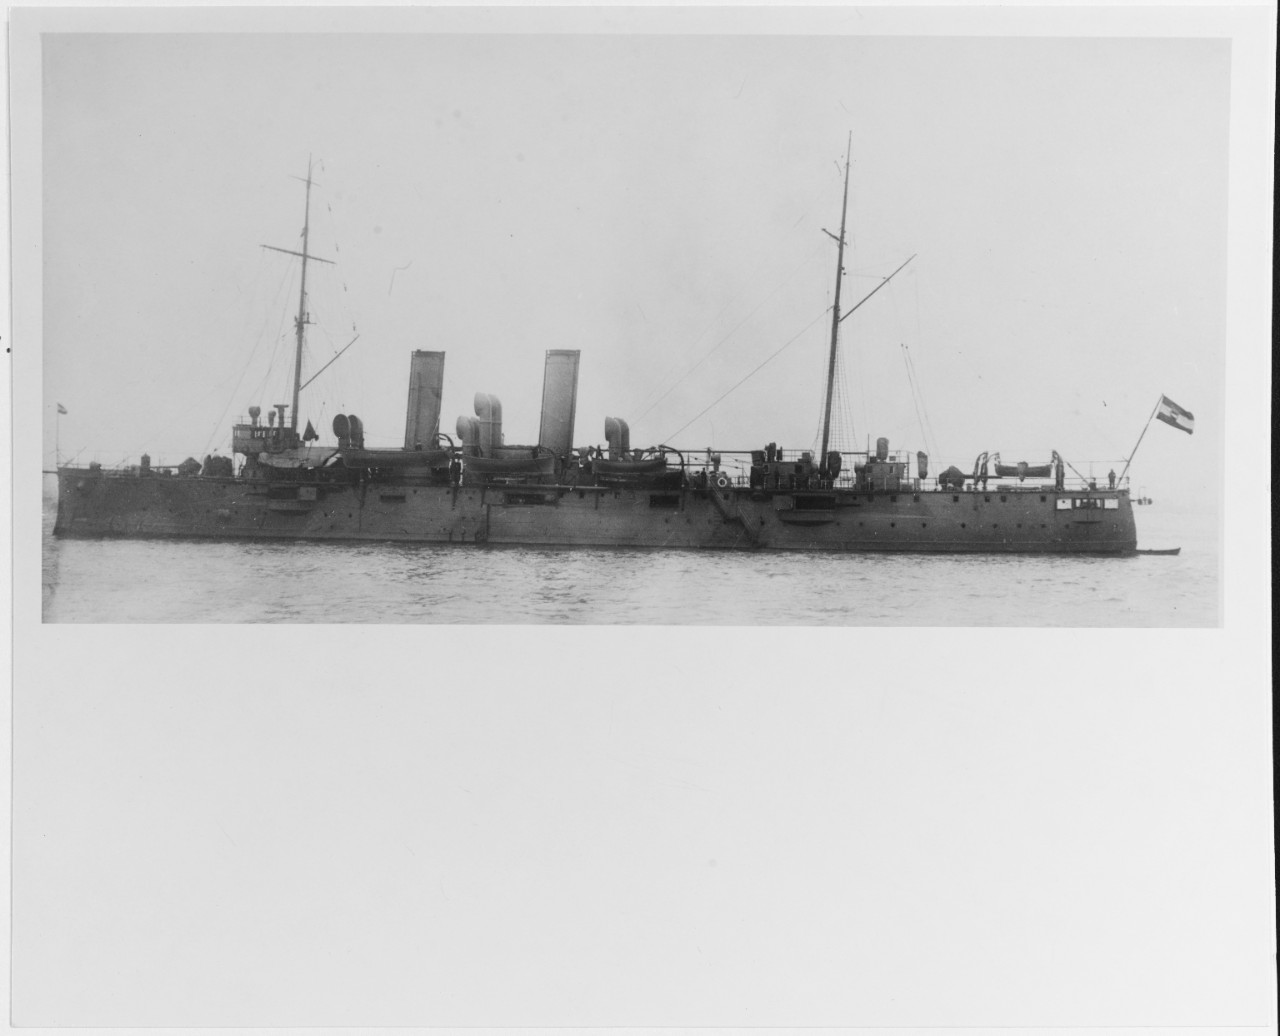 ASPERN (Austro-Hungarian cruiser, 1899)